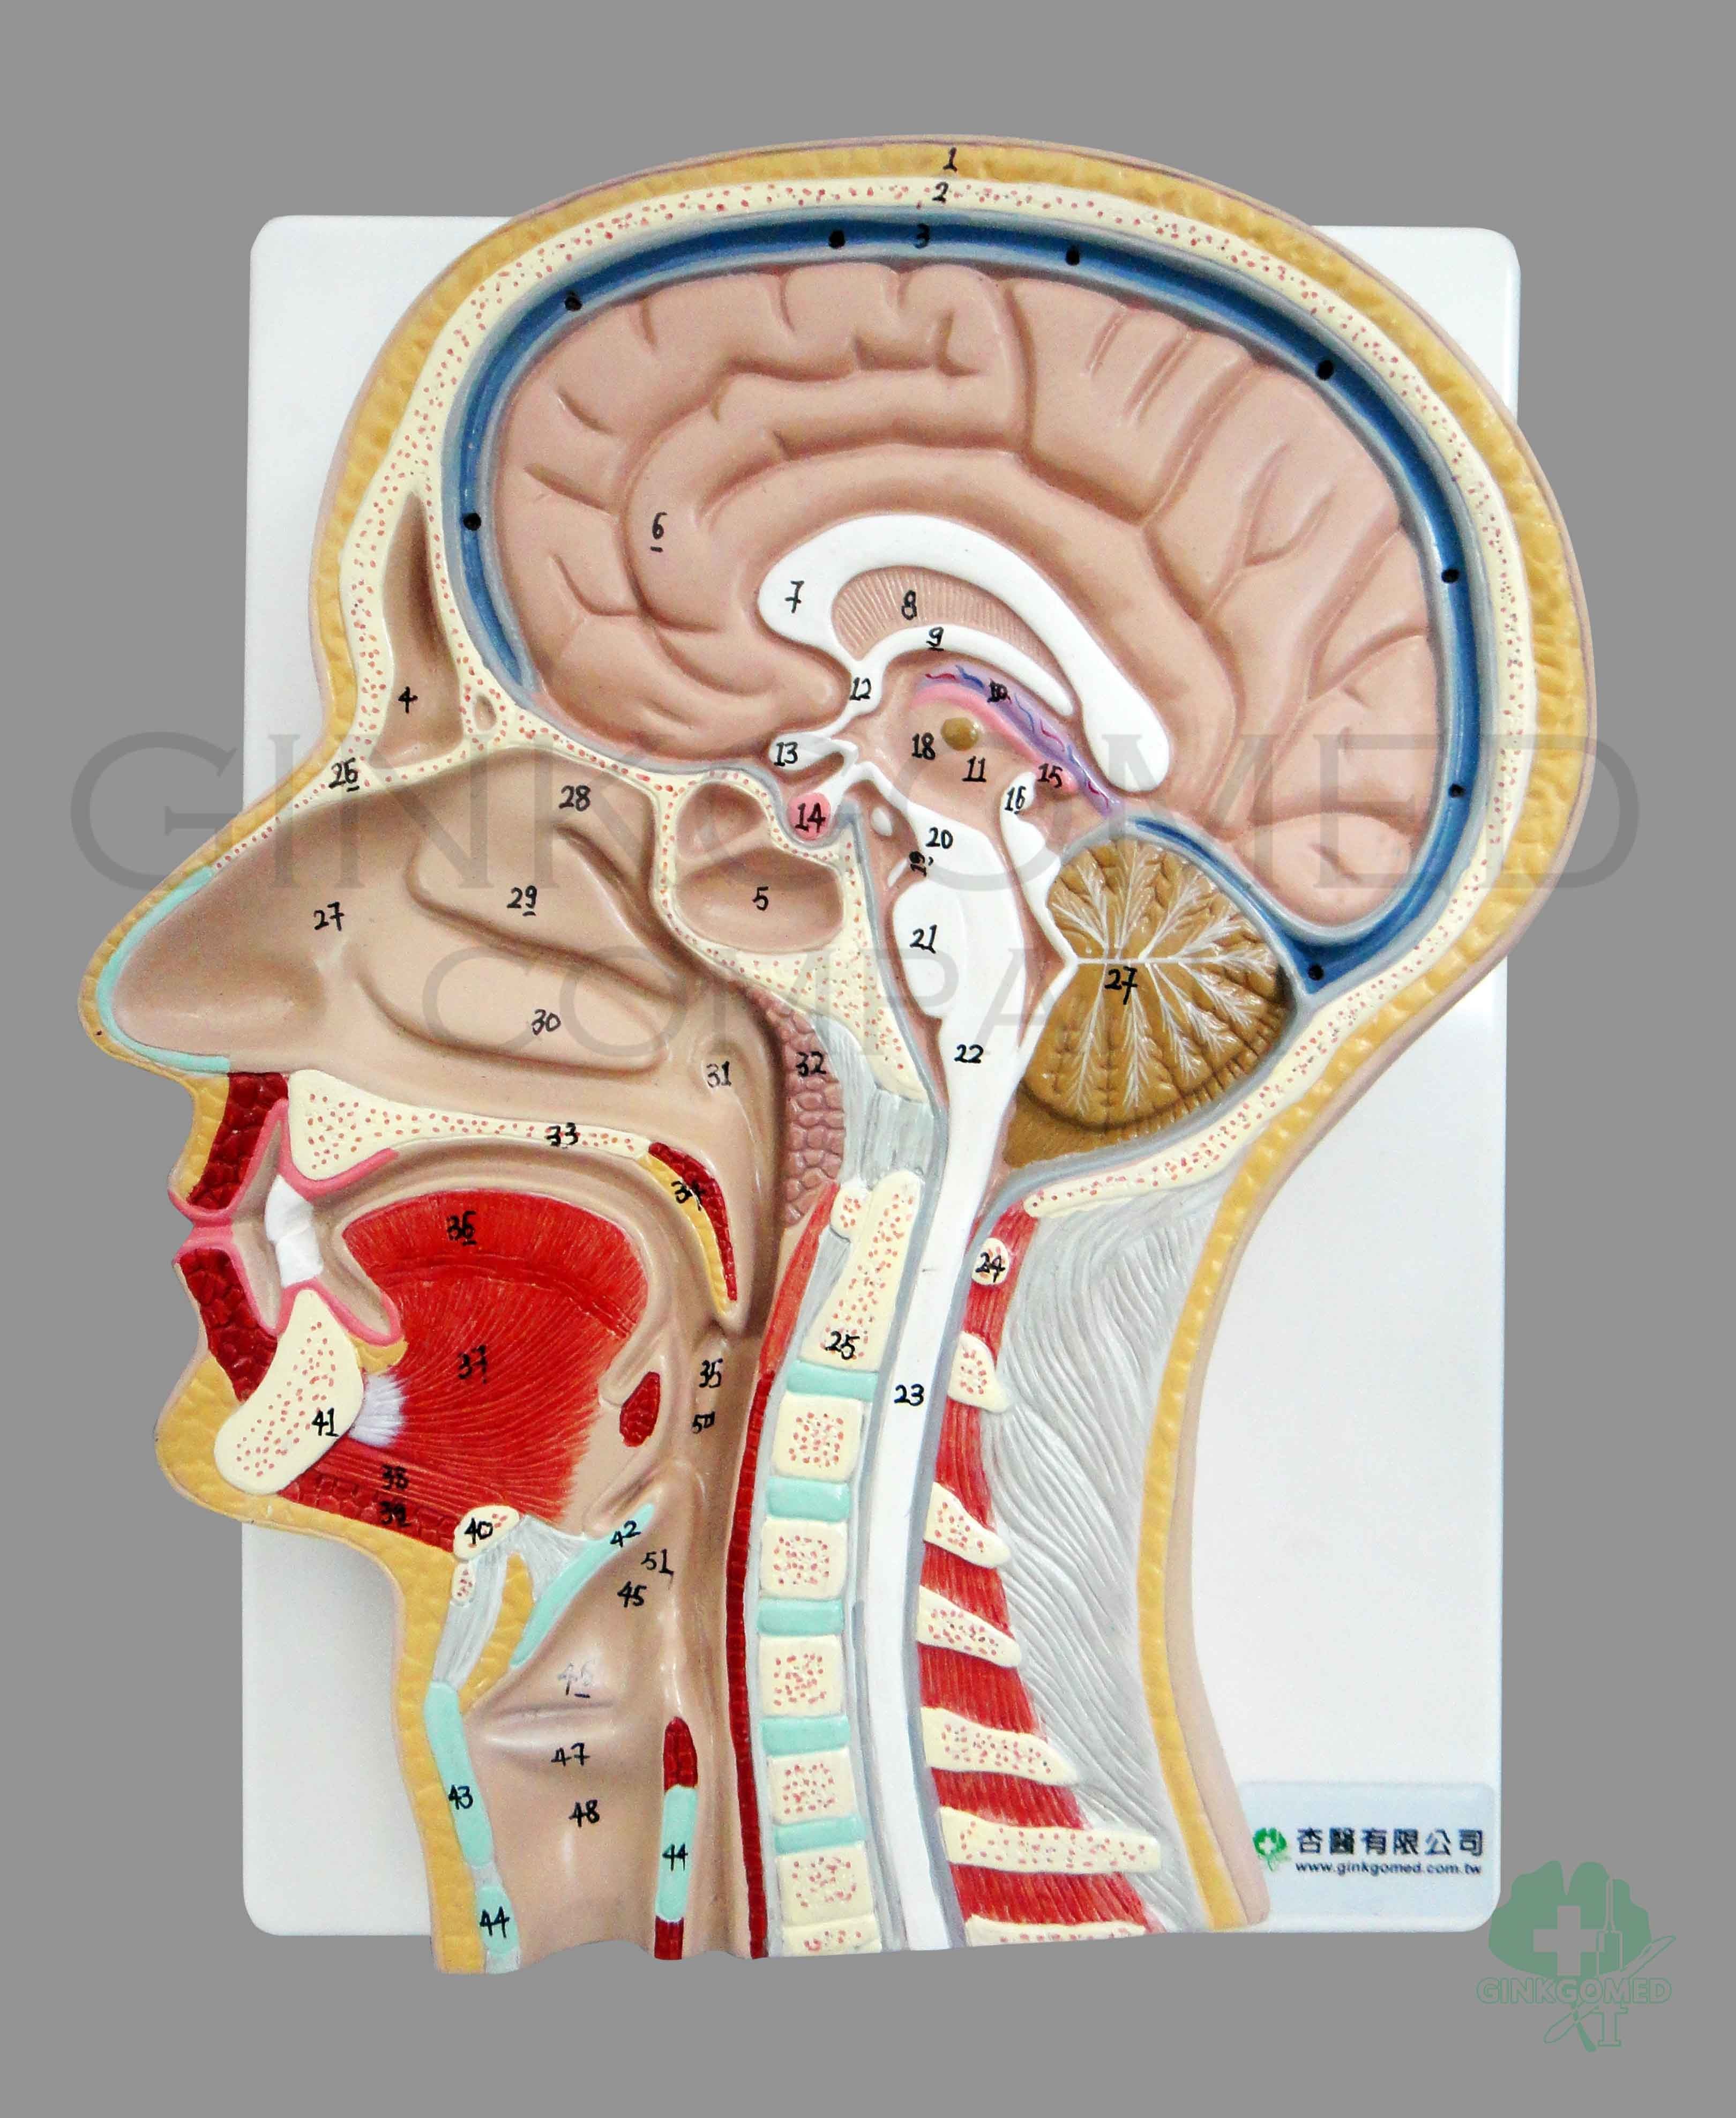 sagittal-section-of-head